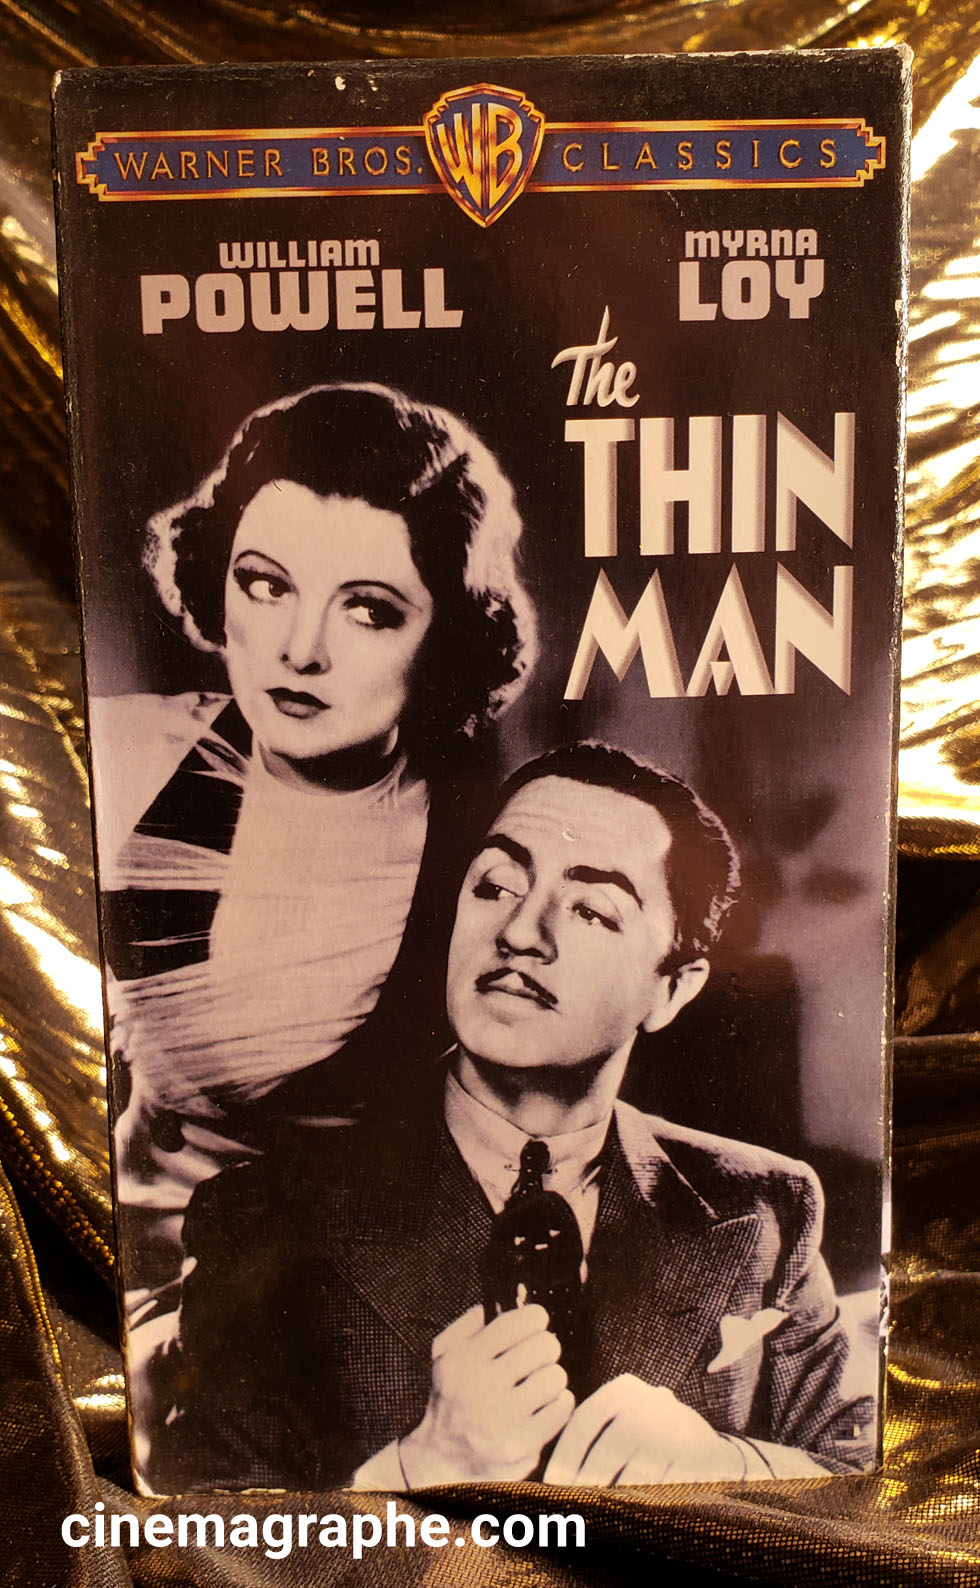 The Thin Man movie Video VHS tape box